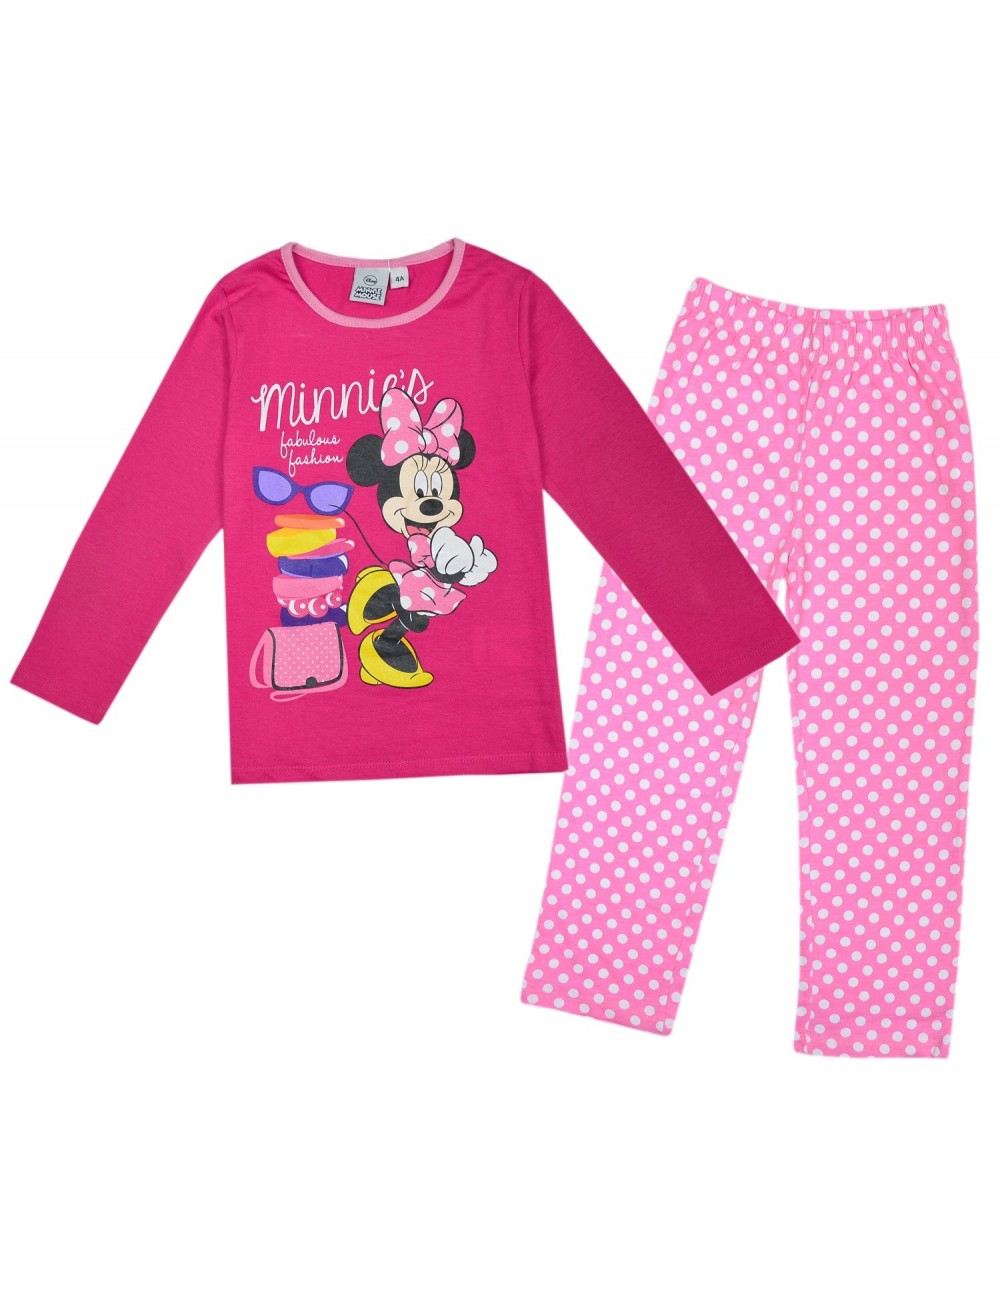 Communism Snack cousin Pijama copii, Minnie Fabulous fashion